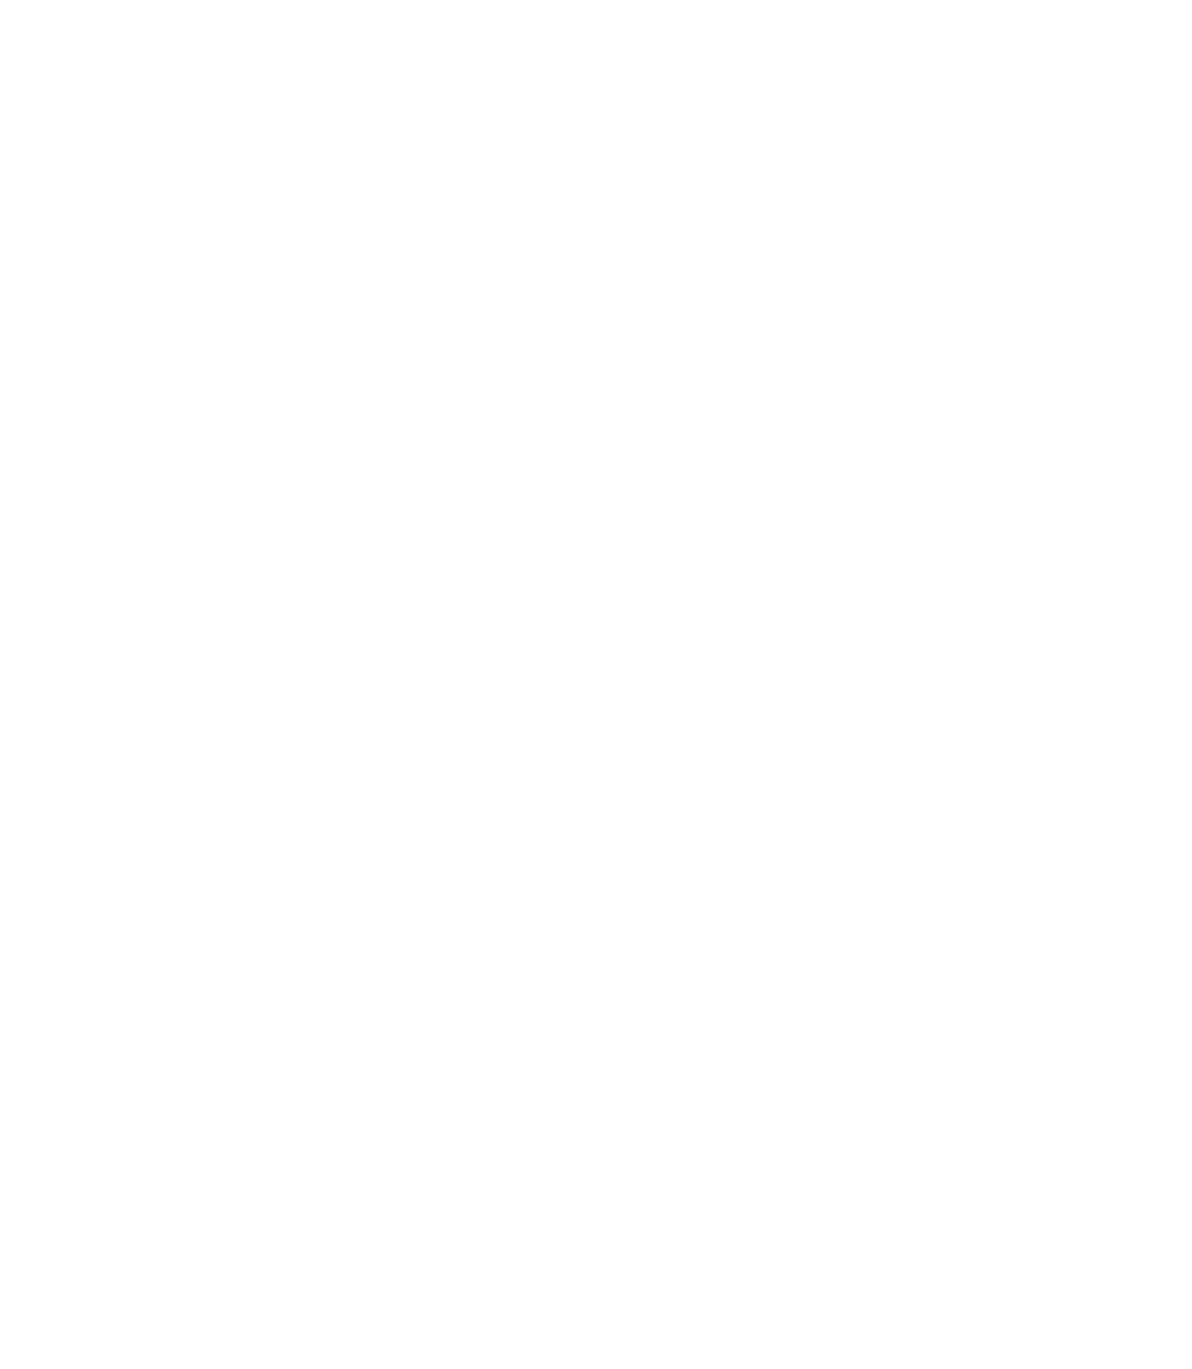 Intricate Snowflake Design.png PNG